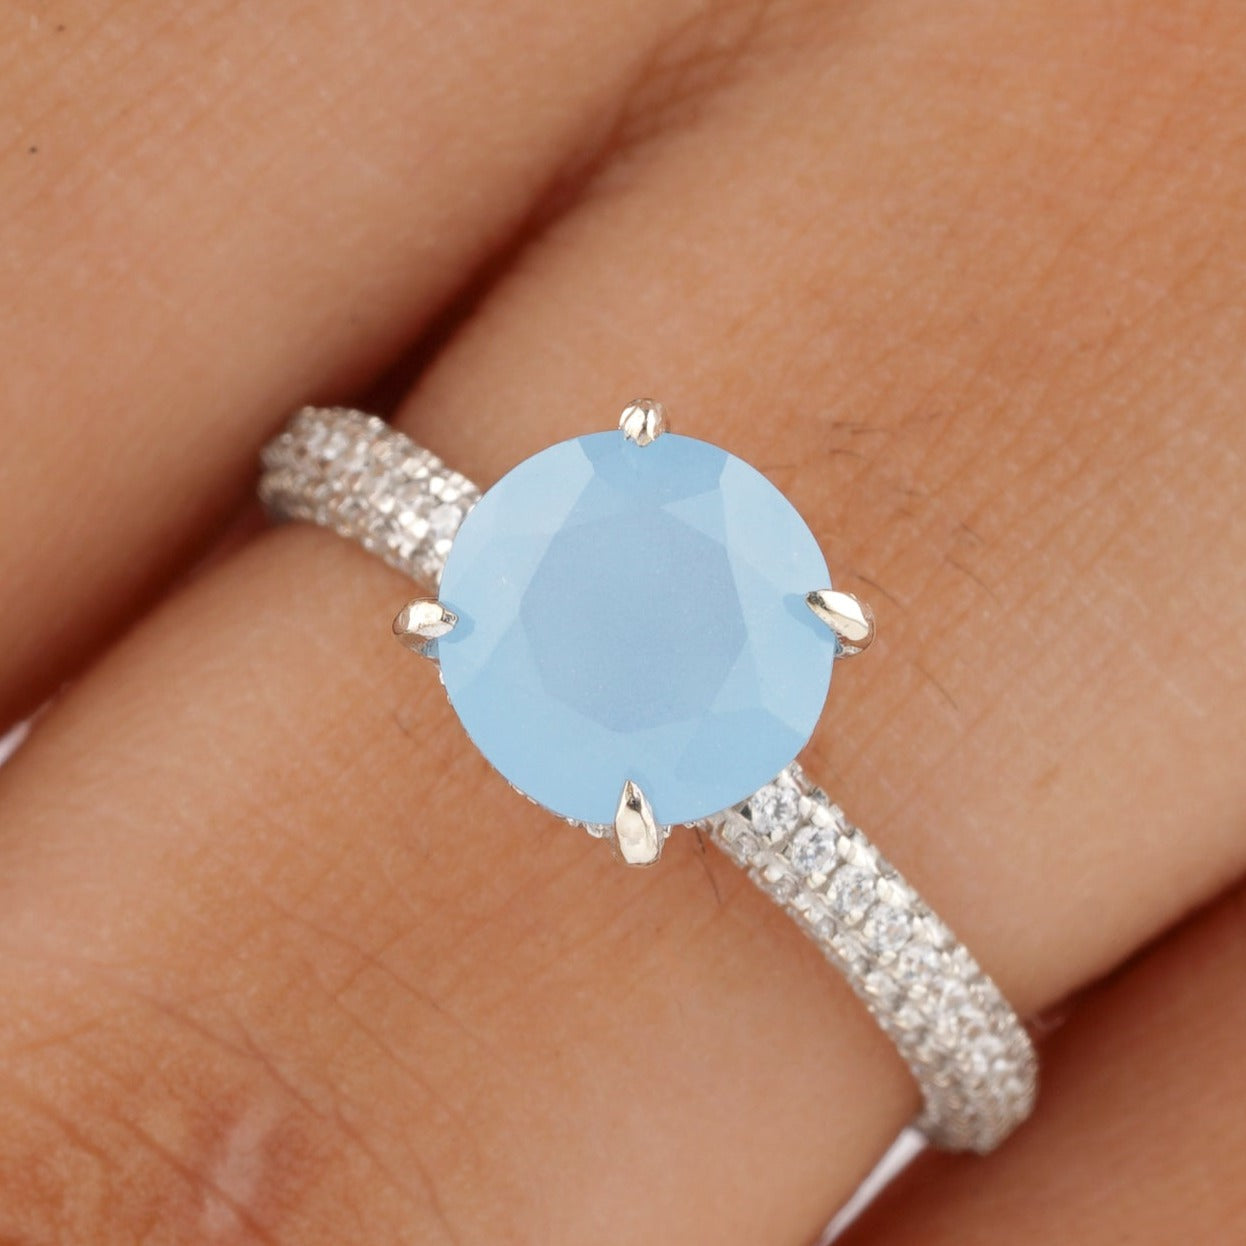 Round Cut Blue Onyx Diamond Engagement Ring - Eurekalook